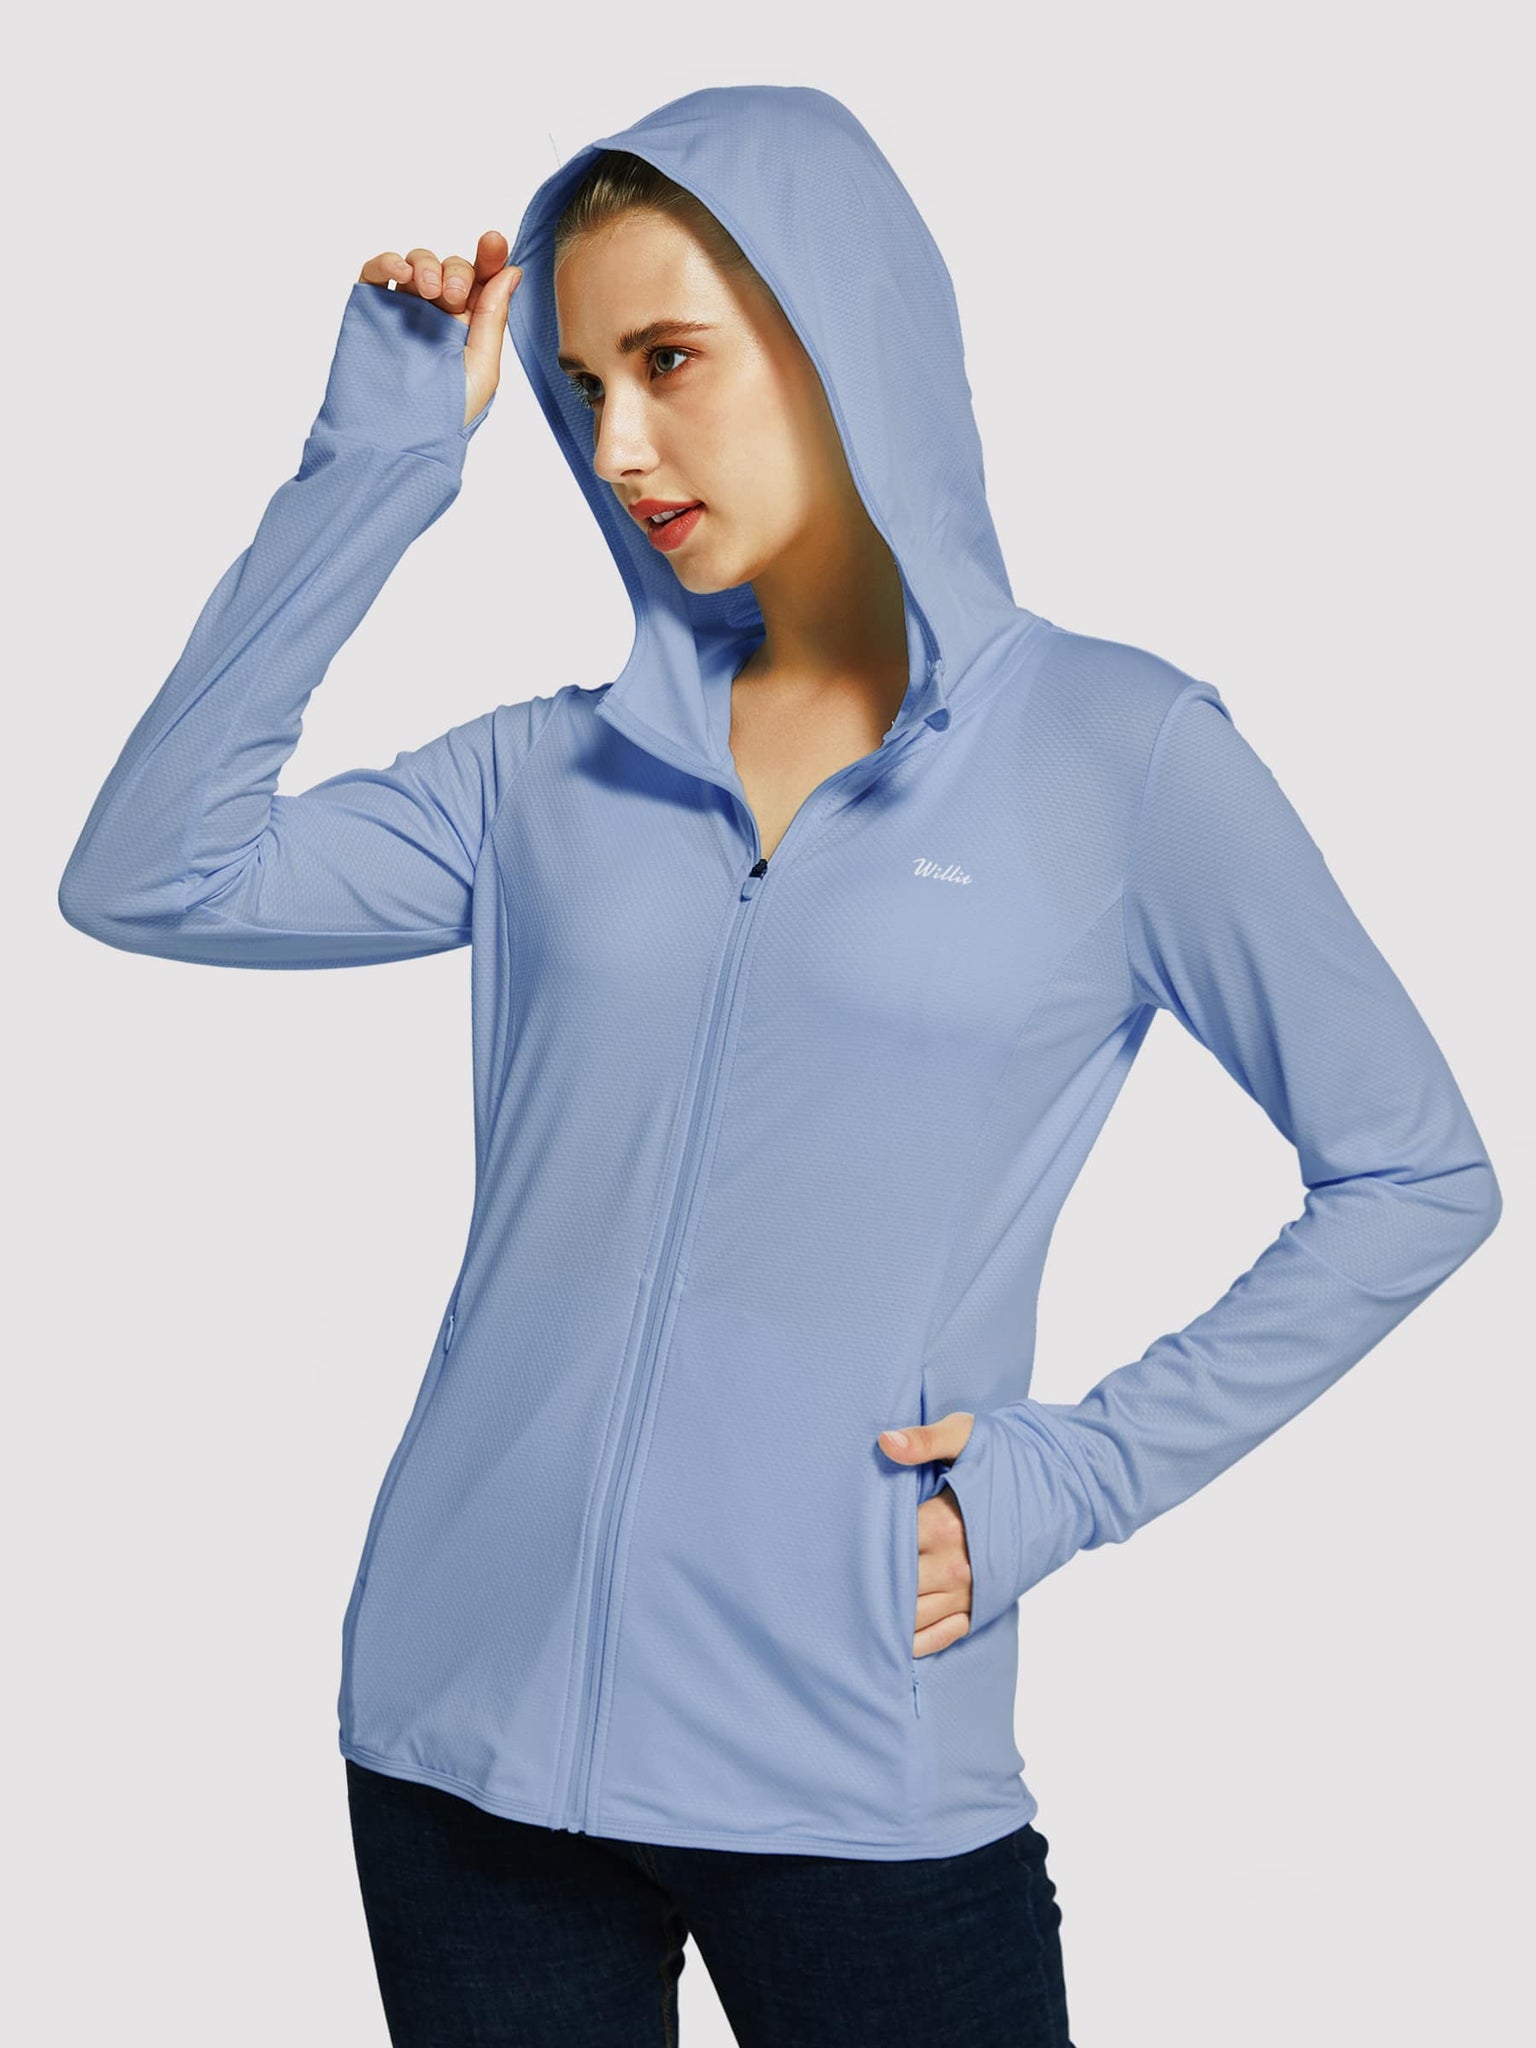 Willit Men's UPF 50+ Sun Protection Hoodie Shirt Long Sleeve SPF Fishing Outdoor UV Shirt Hiking Lightweight Blue L